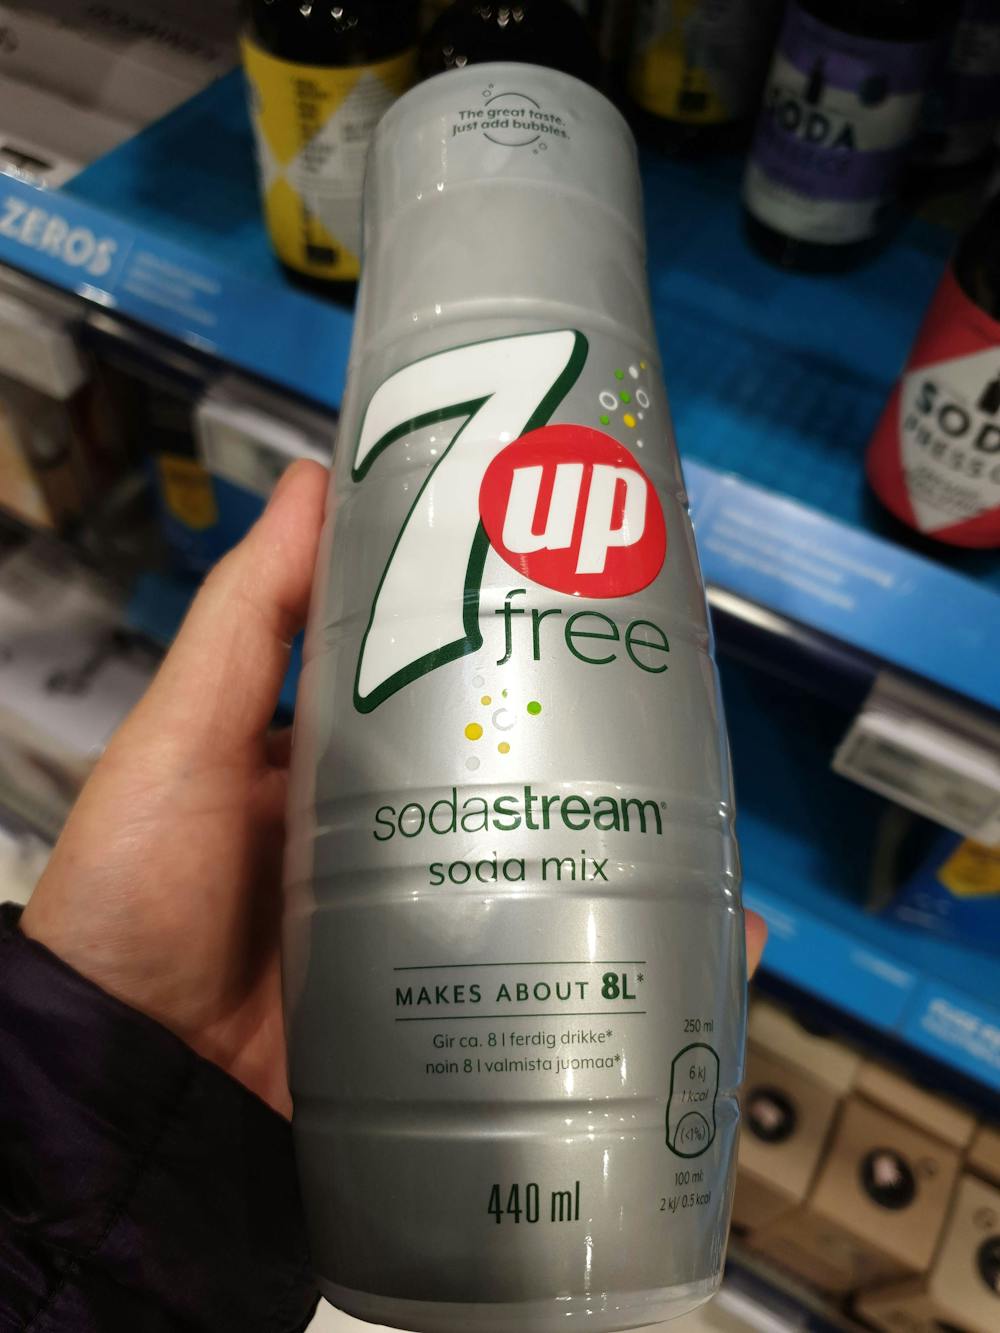 7up - SodaStream